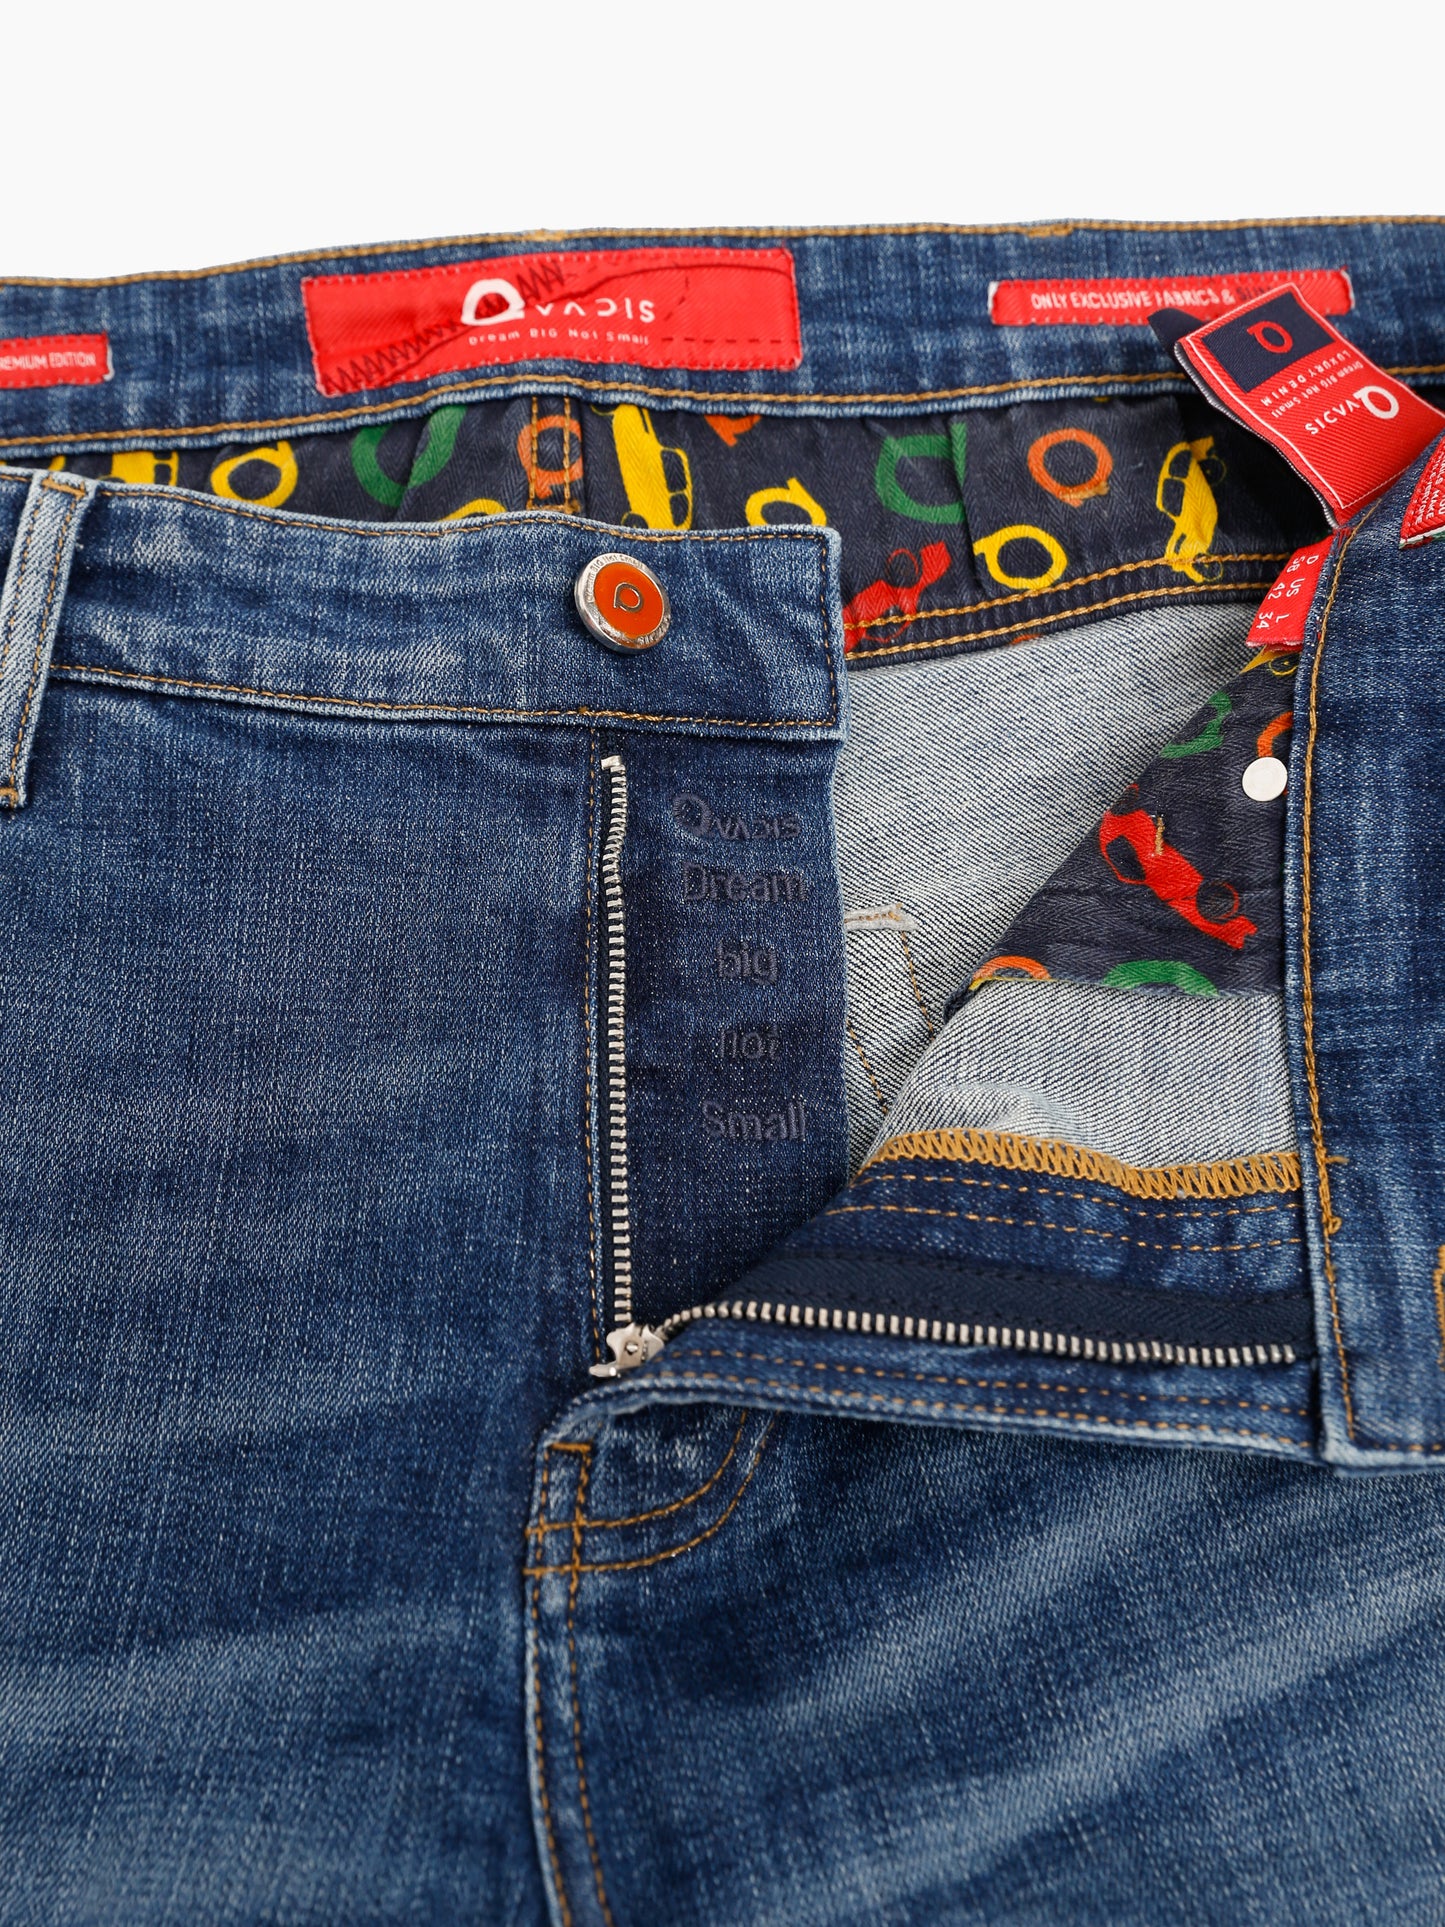 Men's Qvadis BigSize Jeans PRIVAT